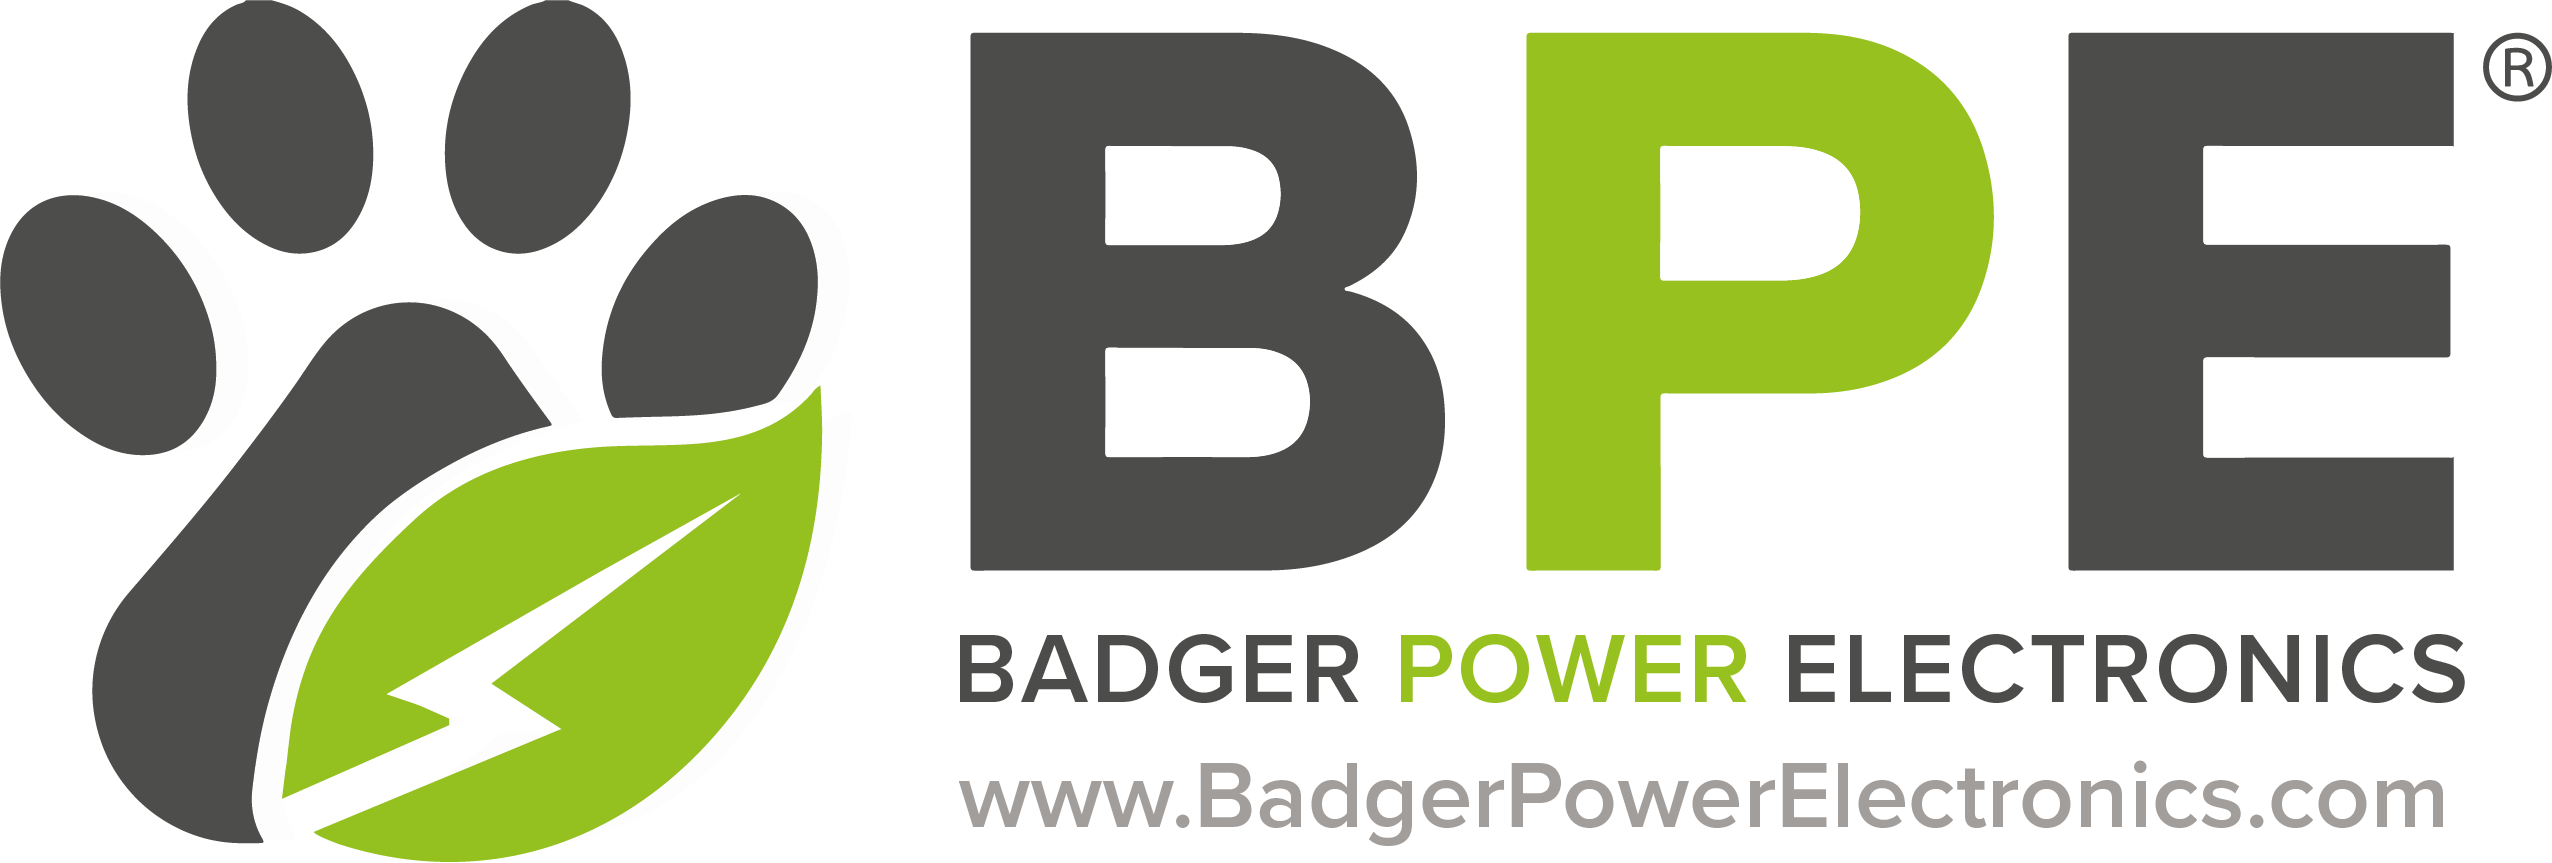 Badger Power Electronics Logo